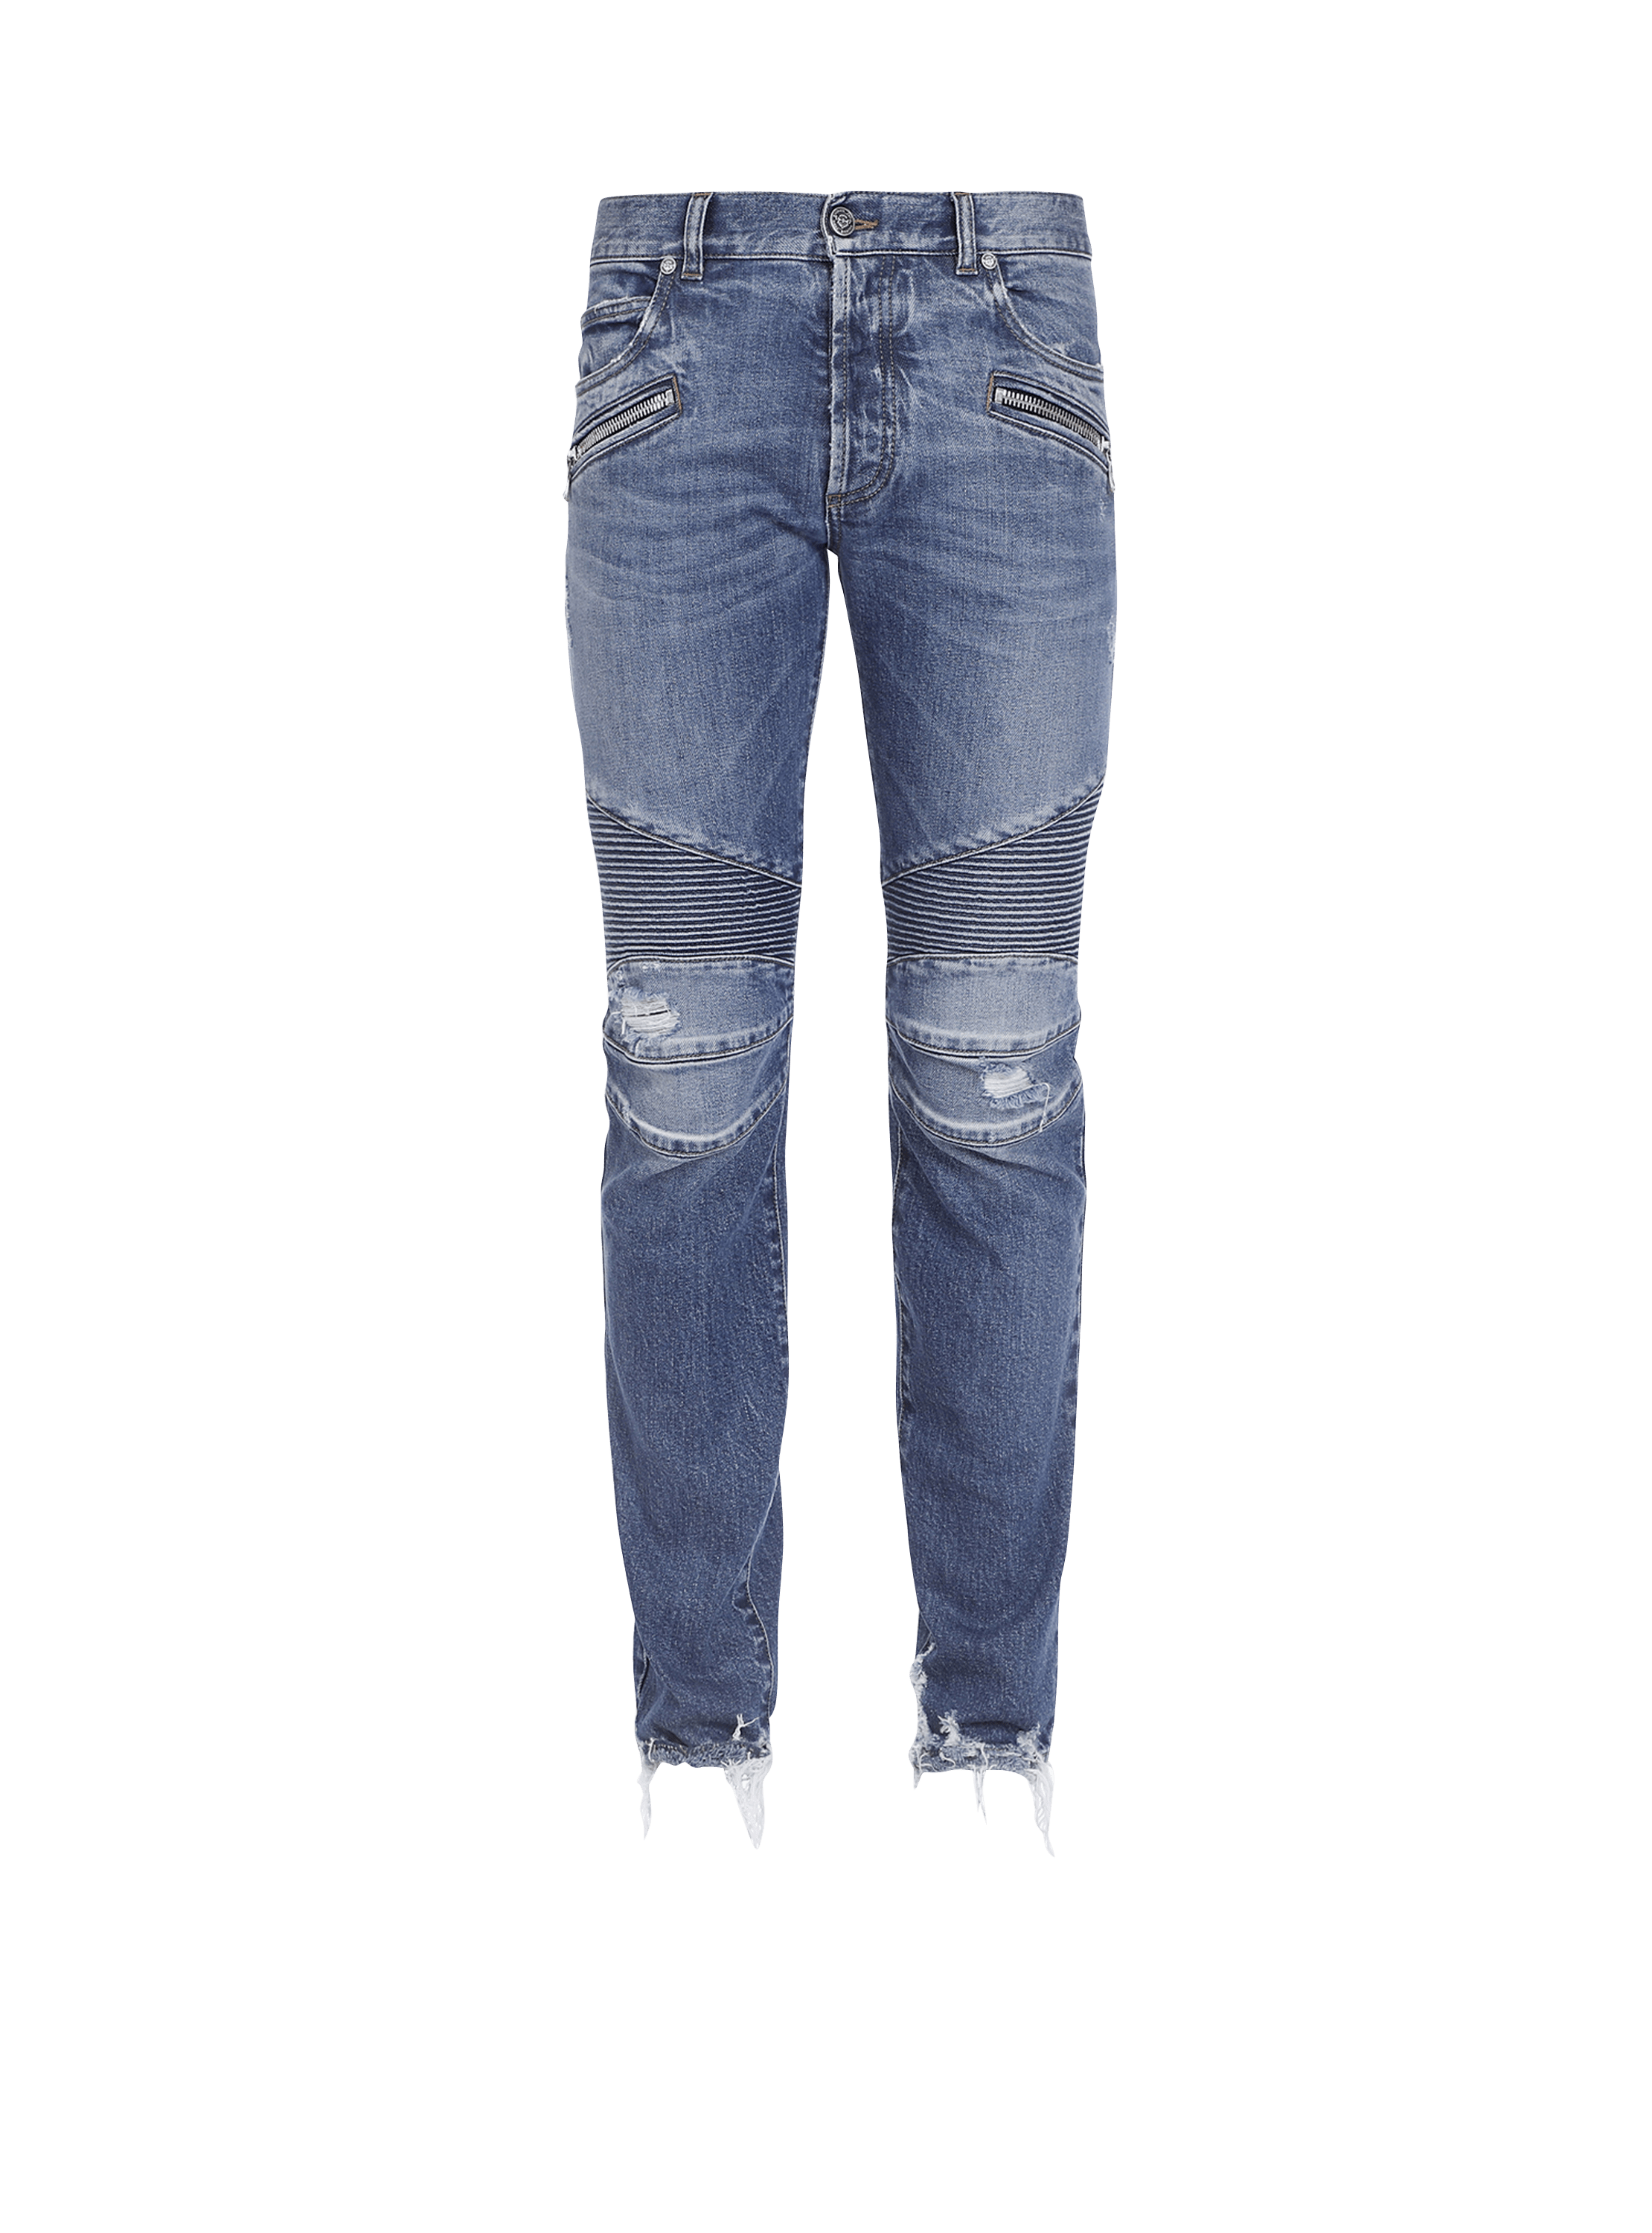 Balmain Men's Blue Slim-cut Faded Biker Jeans, Brand Size 32  WH1MG030149D-6FC - Apparel - Jomashop